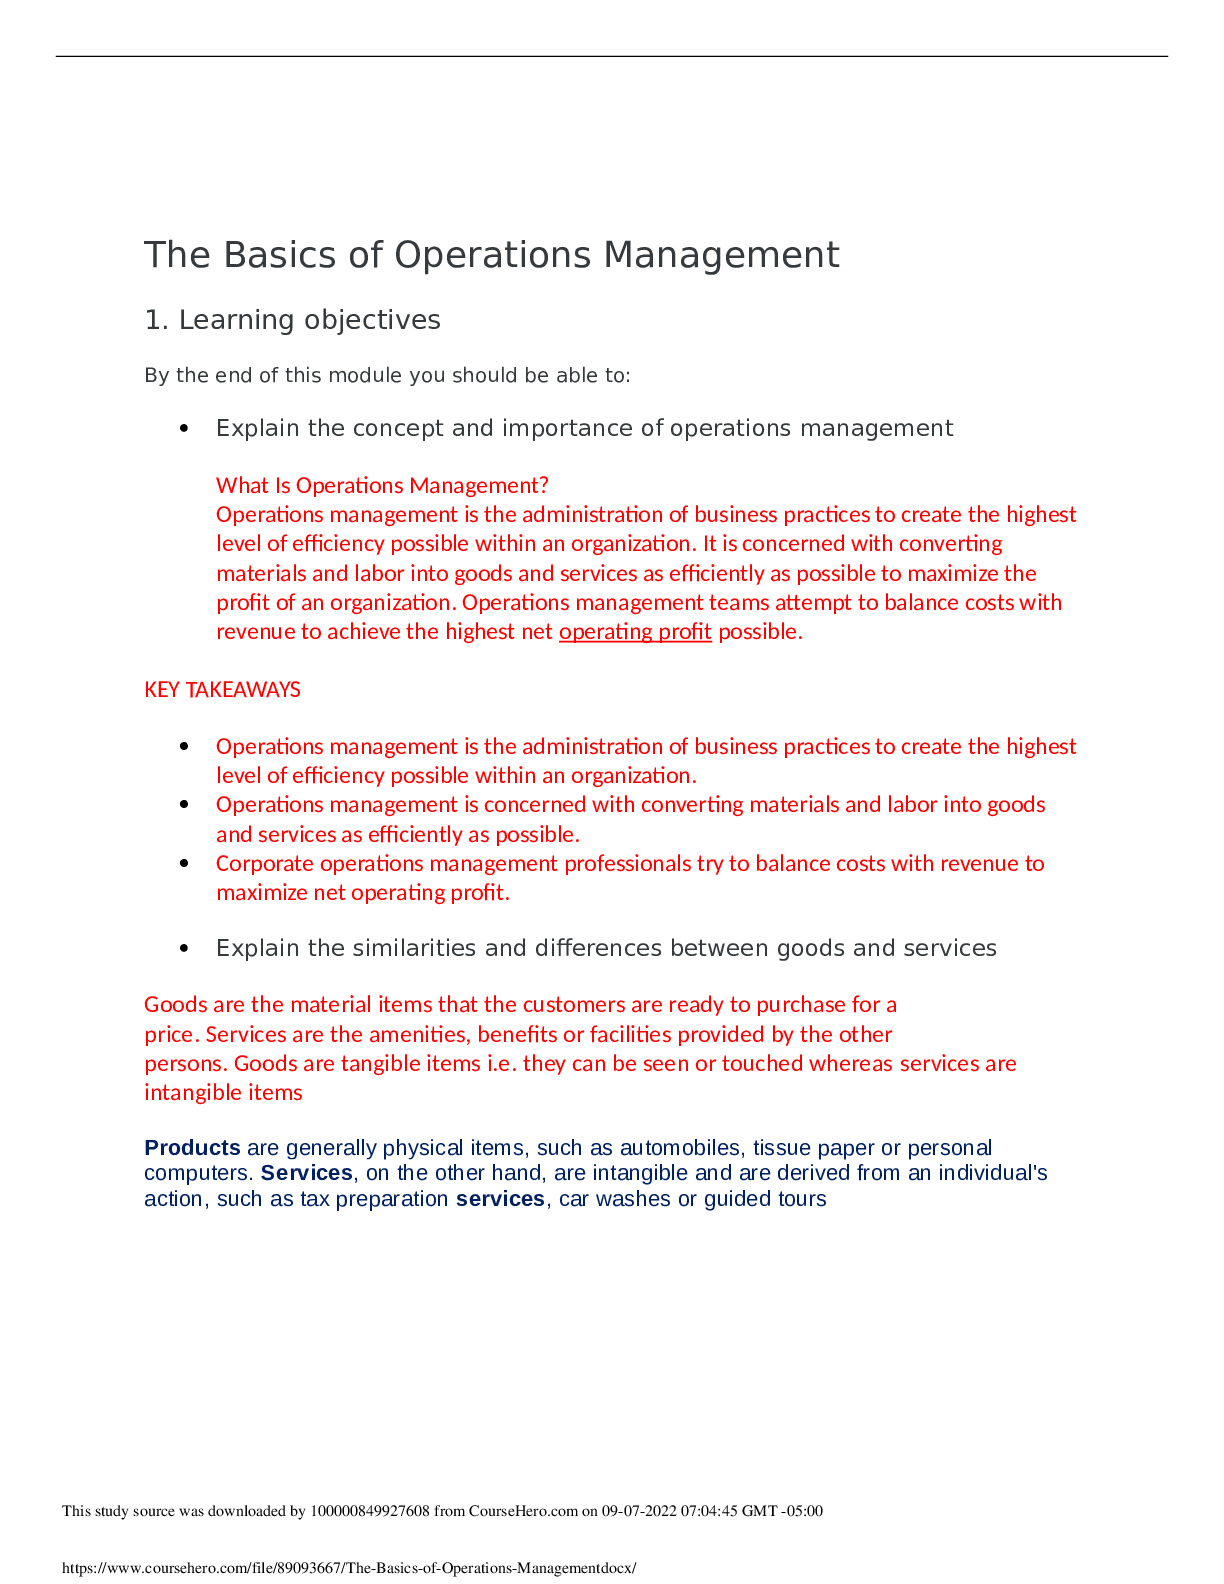 The_Basics_of_Operations_Management.docx